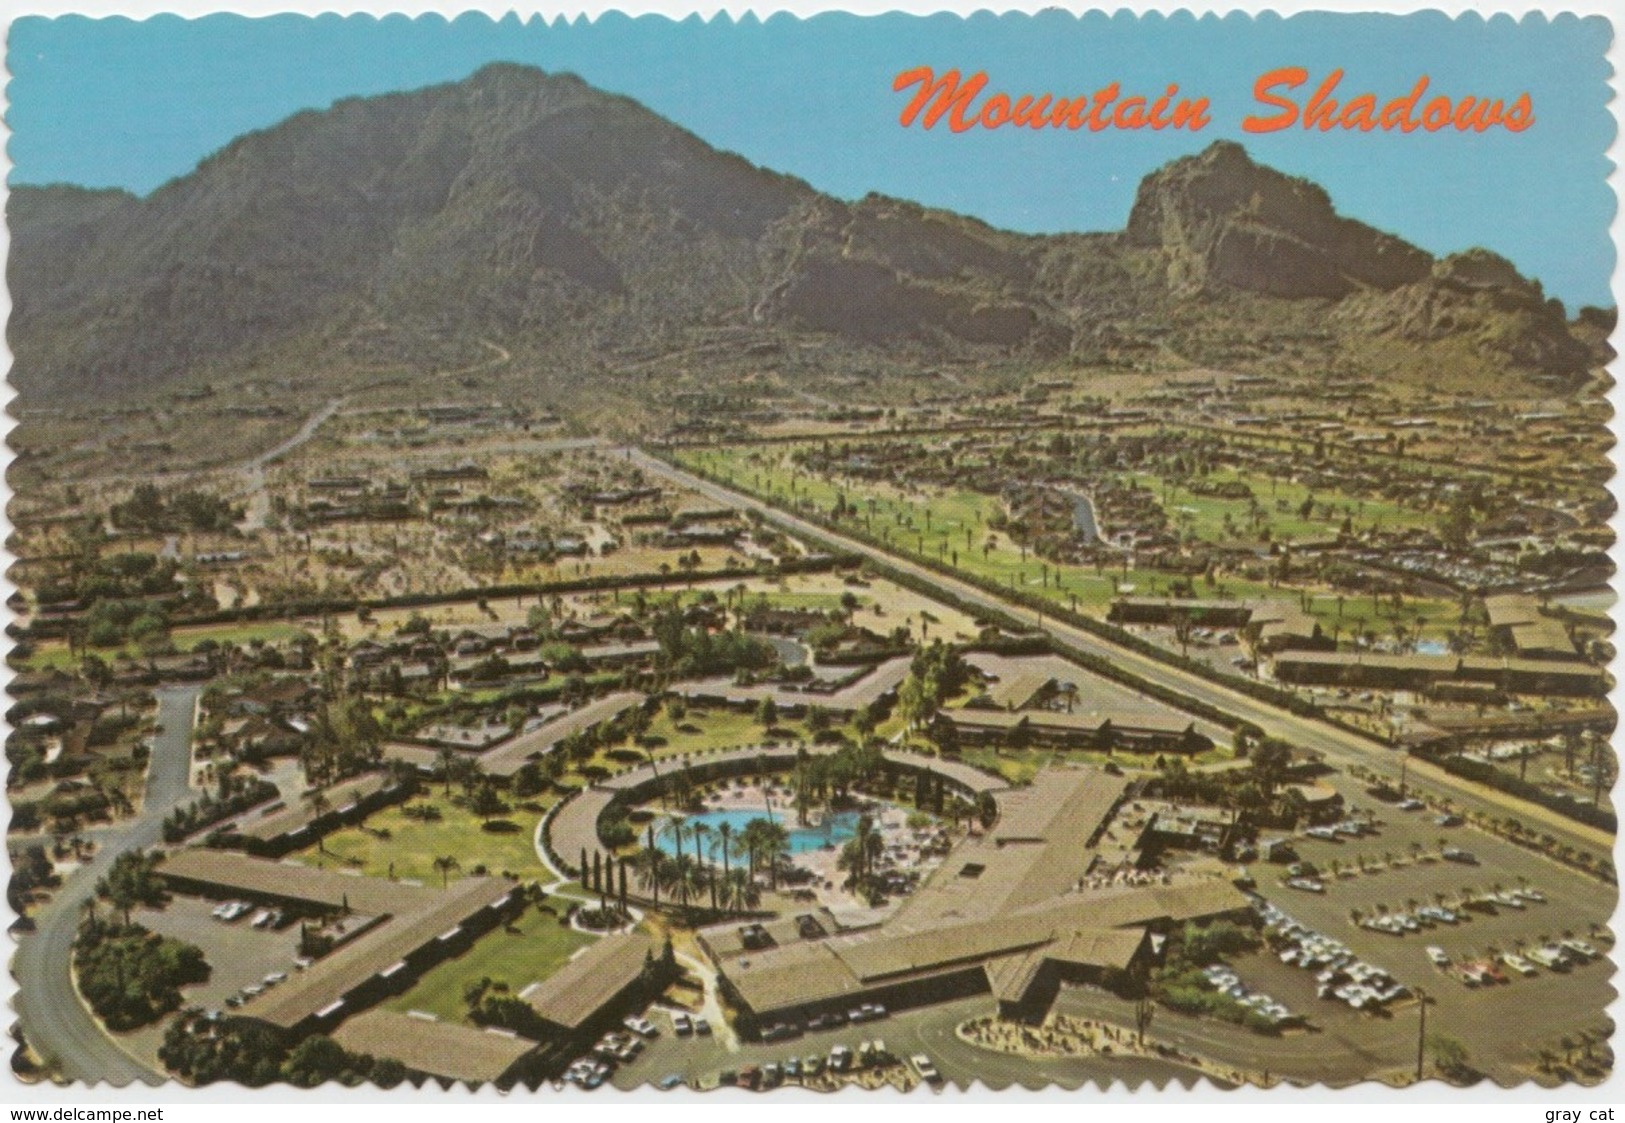 Mountain Shadows Resort, Scottsdale, Arizona, Unused Postcard [20878] - Scottsdale